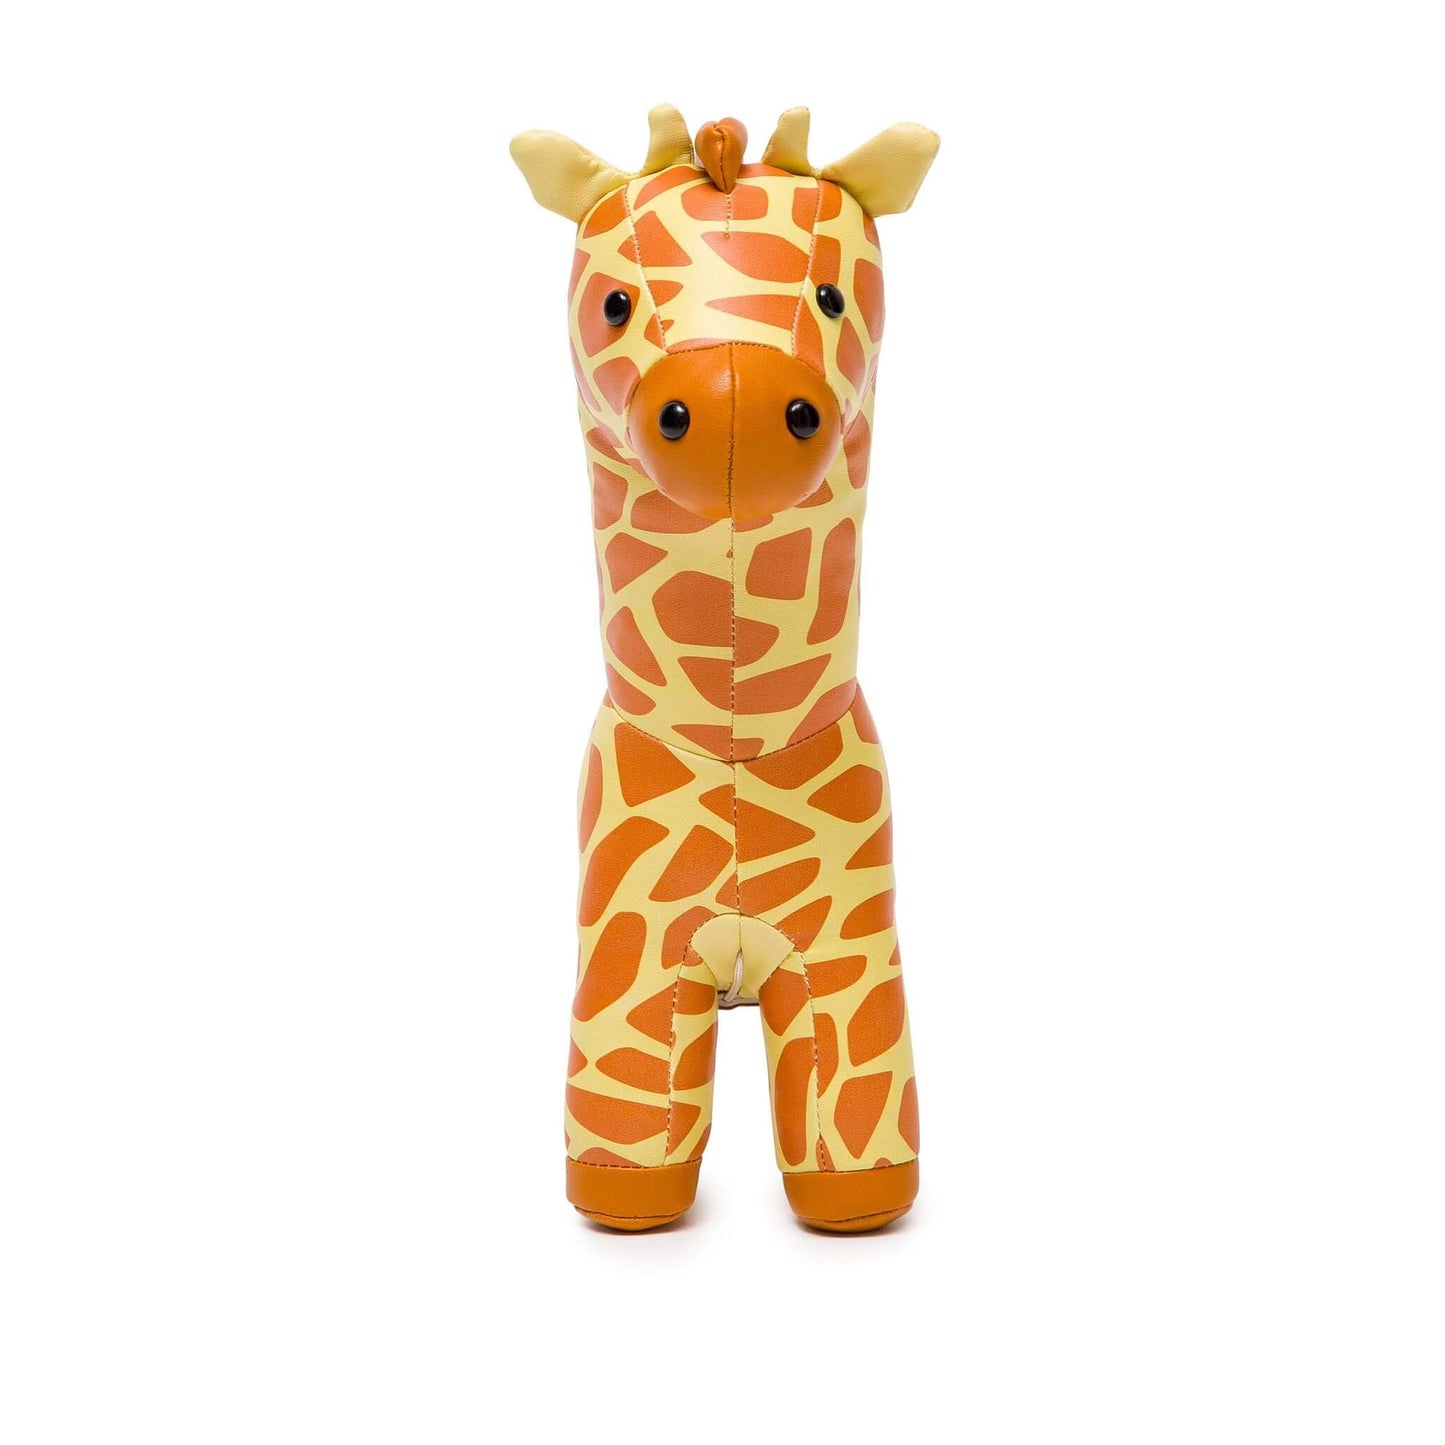 Little Big Friends Musical Animal (Gina the Giraffe)